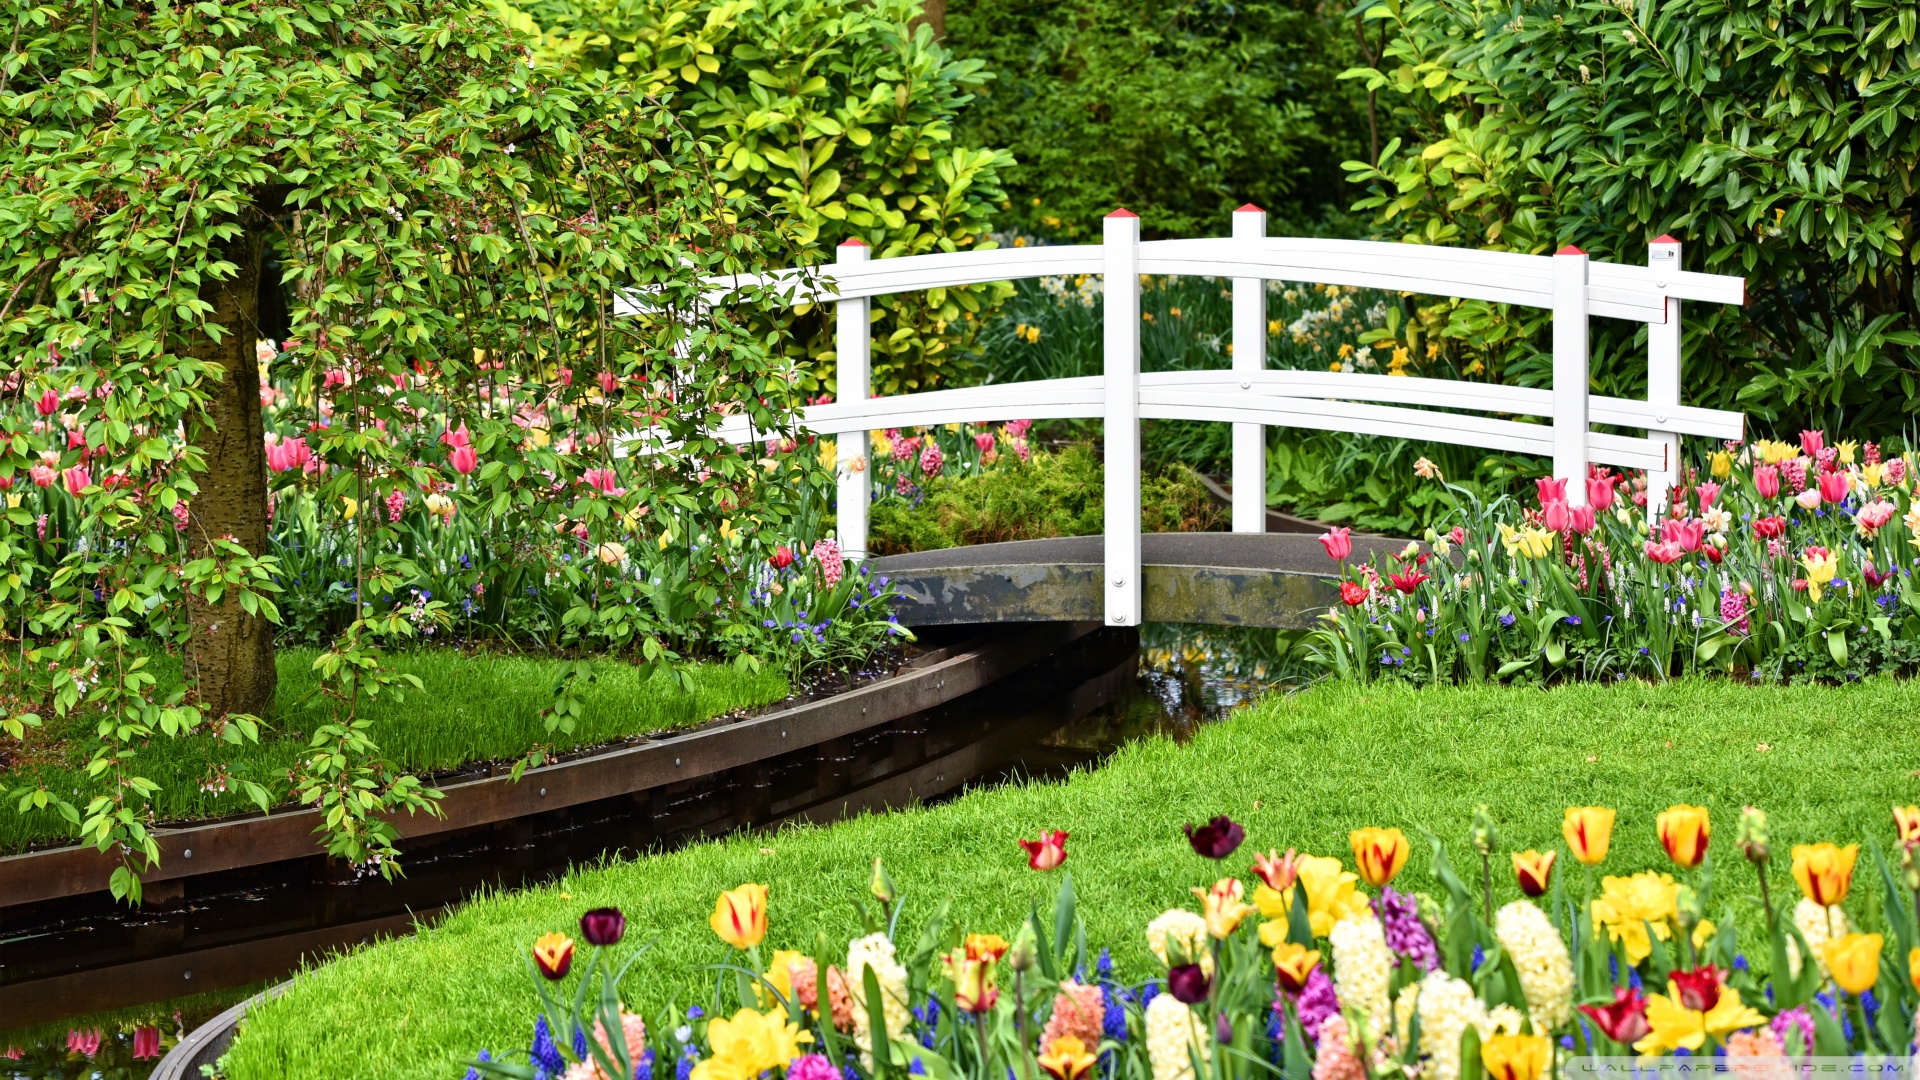 Small Garden Pond with Bridge, Spring Flowers Ultra HD Desktop Background Wallpaper for 4K UHD TV, Widescreen & UltraWide Desktop & Laptop, Tablet